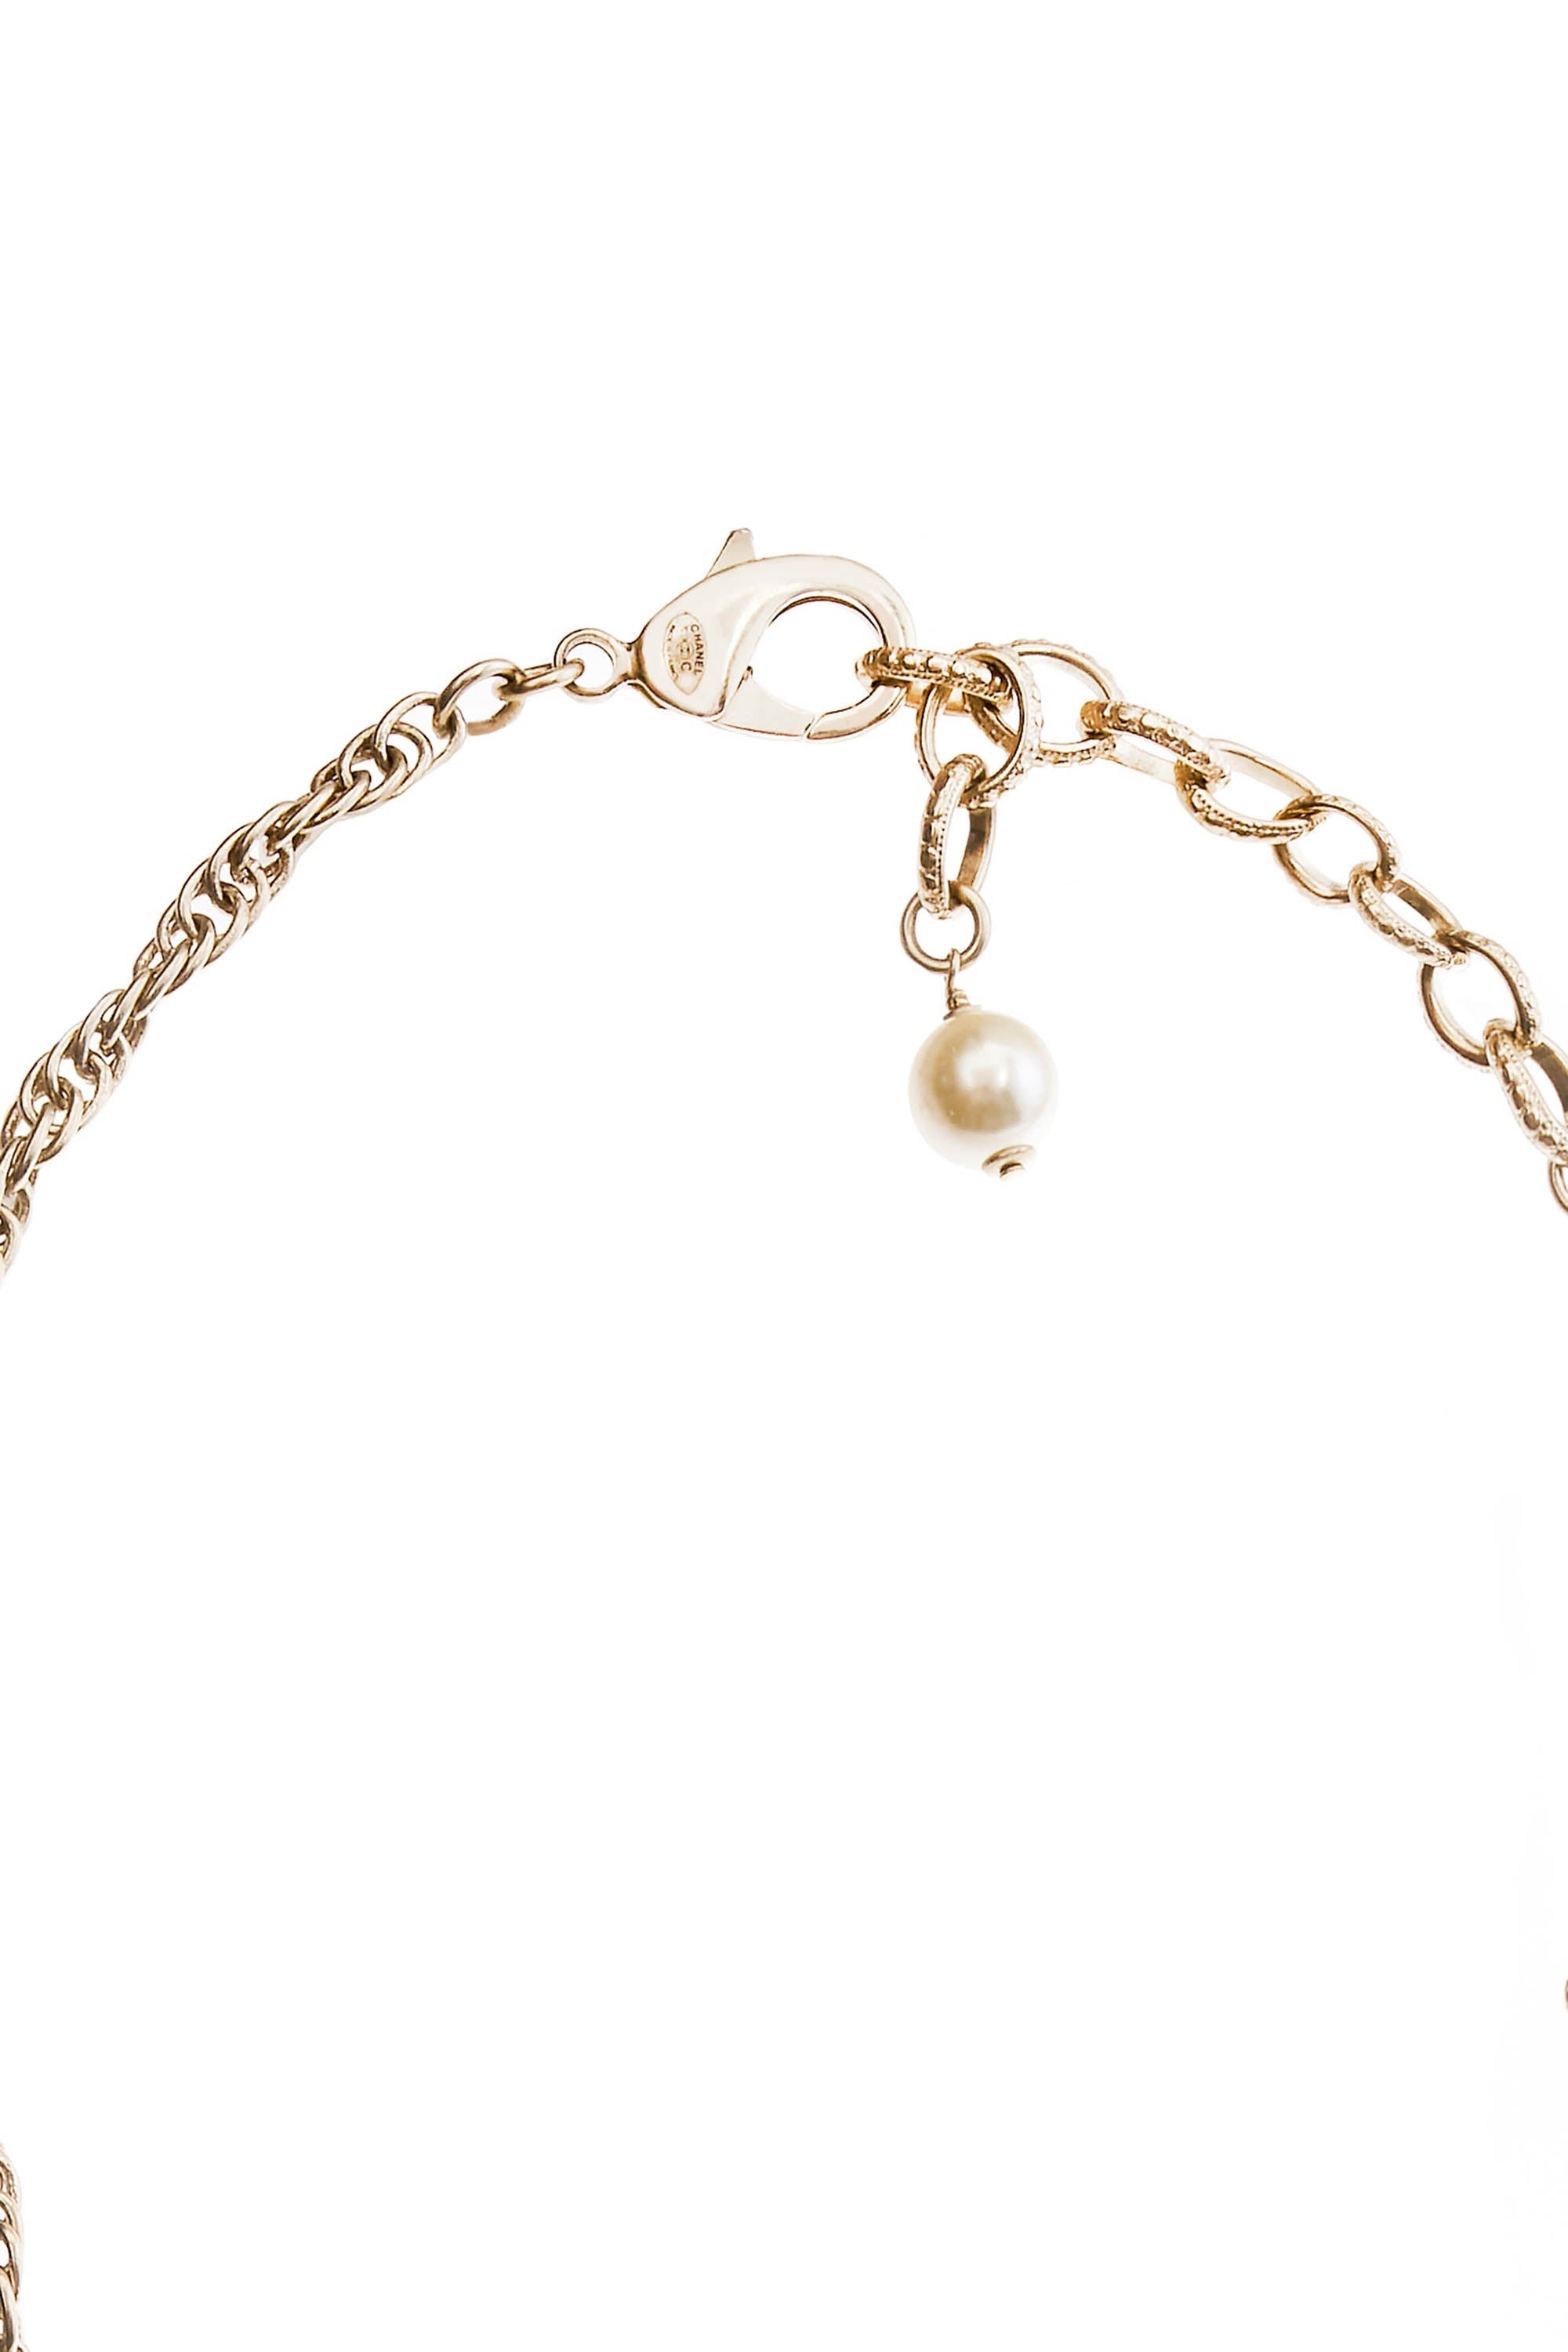 Chanel la pausa Gold Multi Charm Necklace 2019 Size L